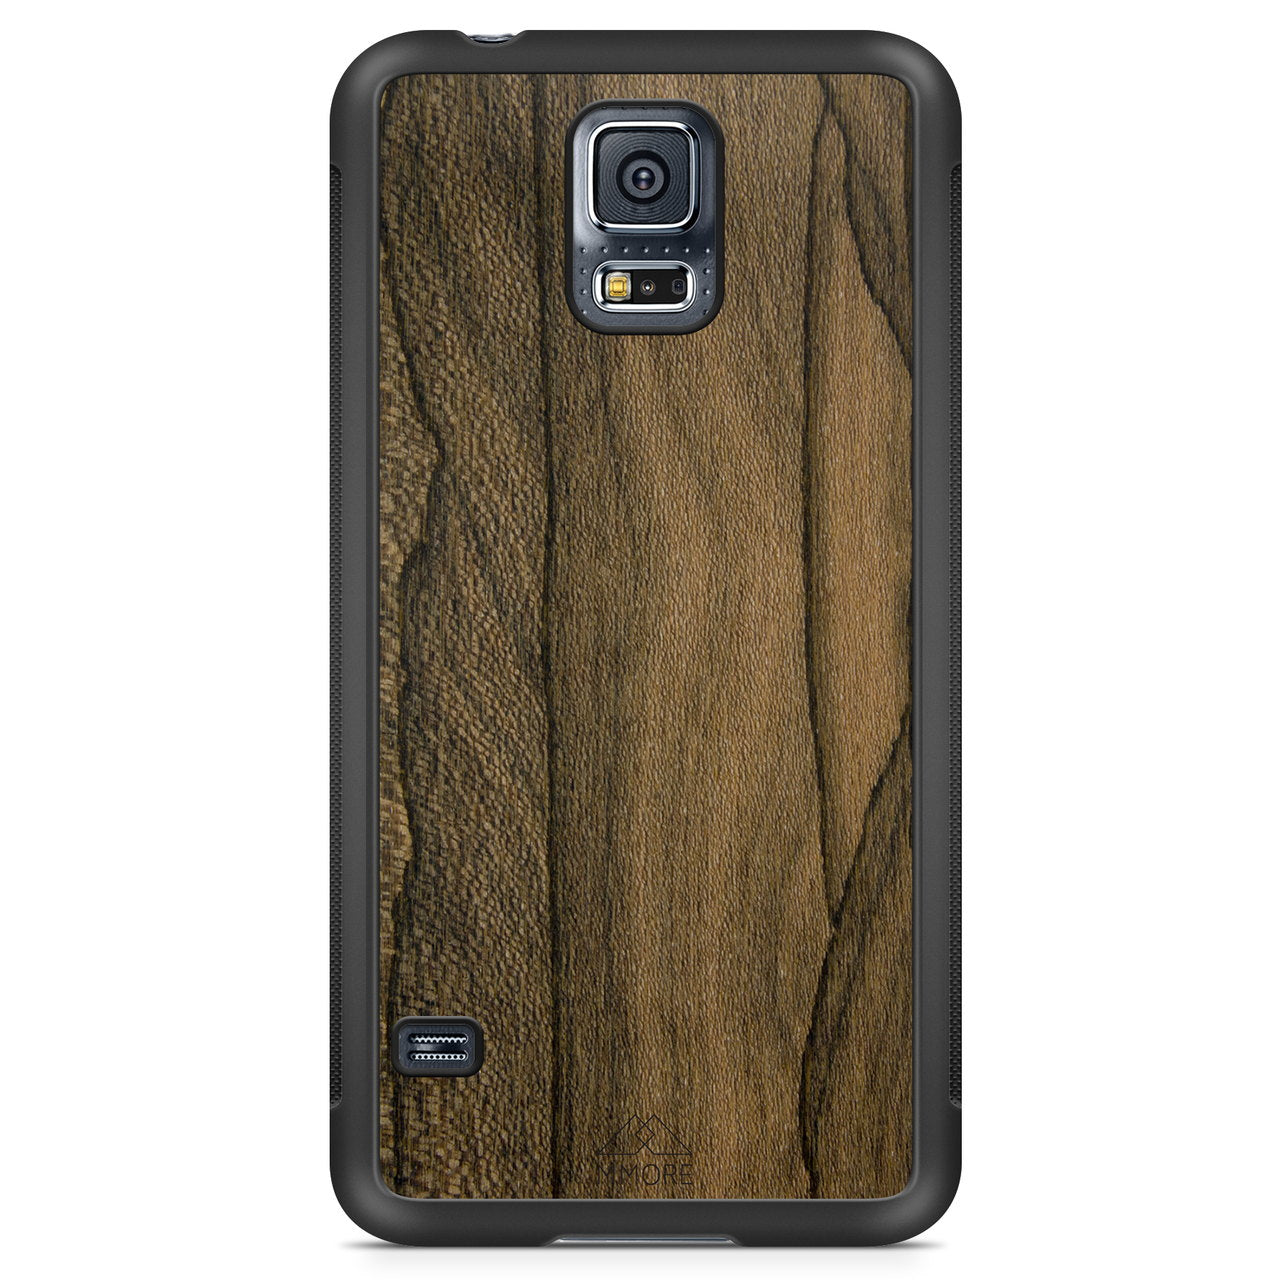 Caja del teléfono Samsung S5 de madera de ziricote